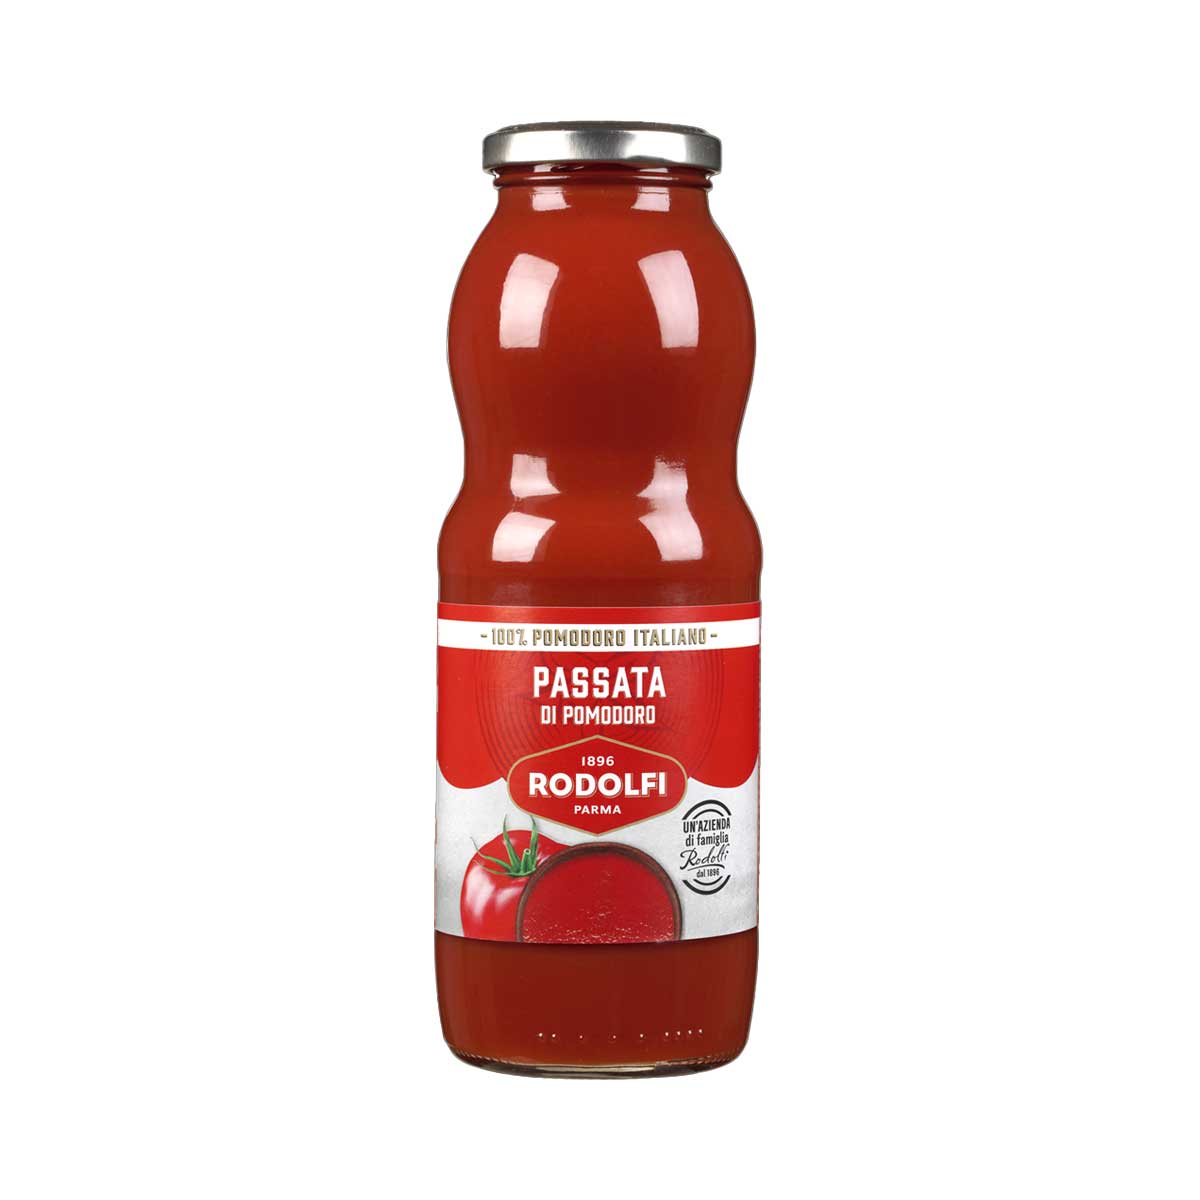 Italian Ardita Super Pizza Tomato Sauce by Rodolfi, 22.05 lb (10 kg)